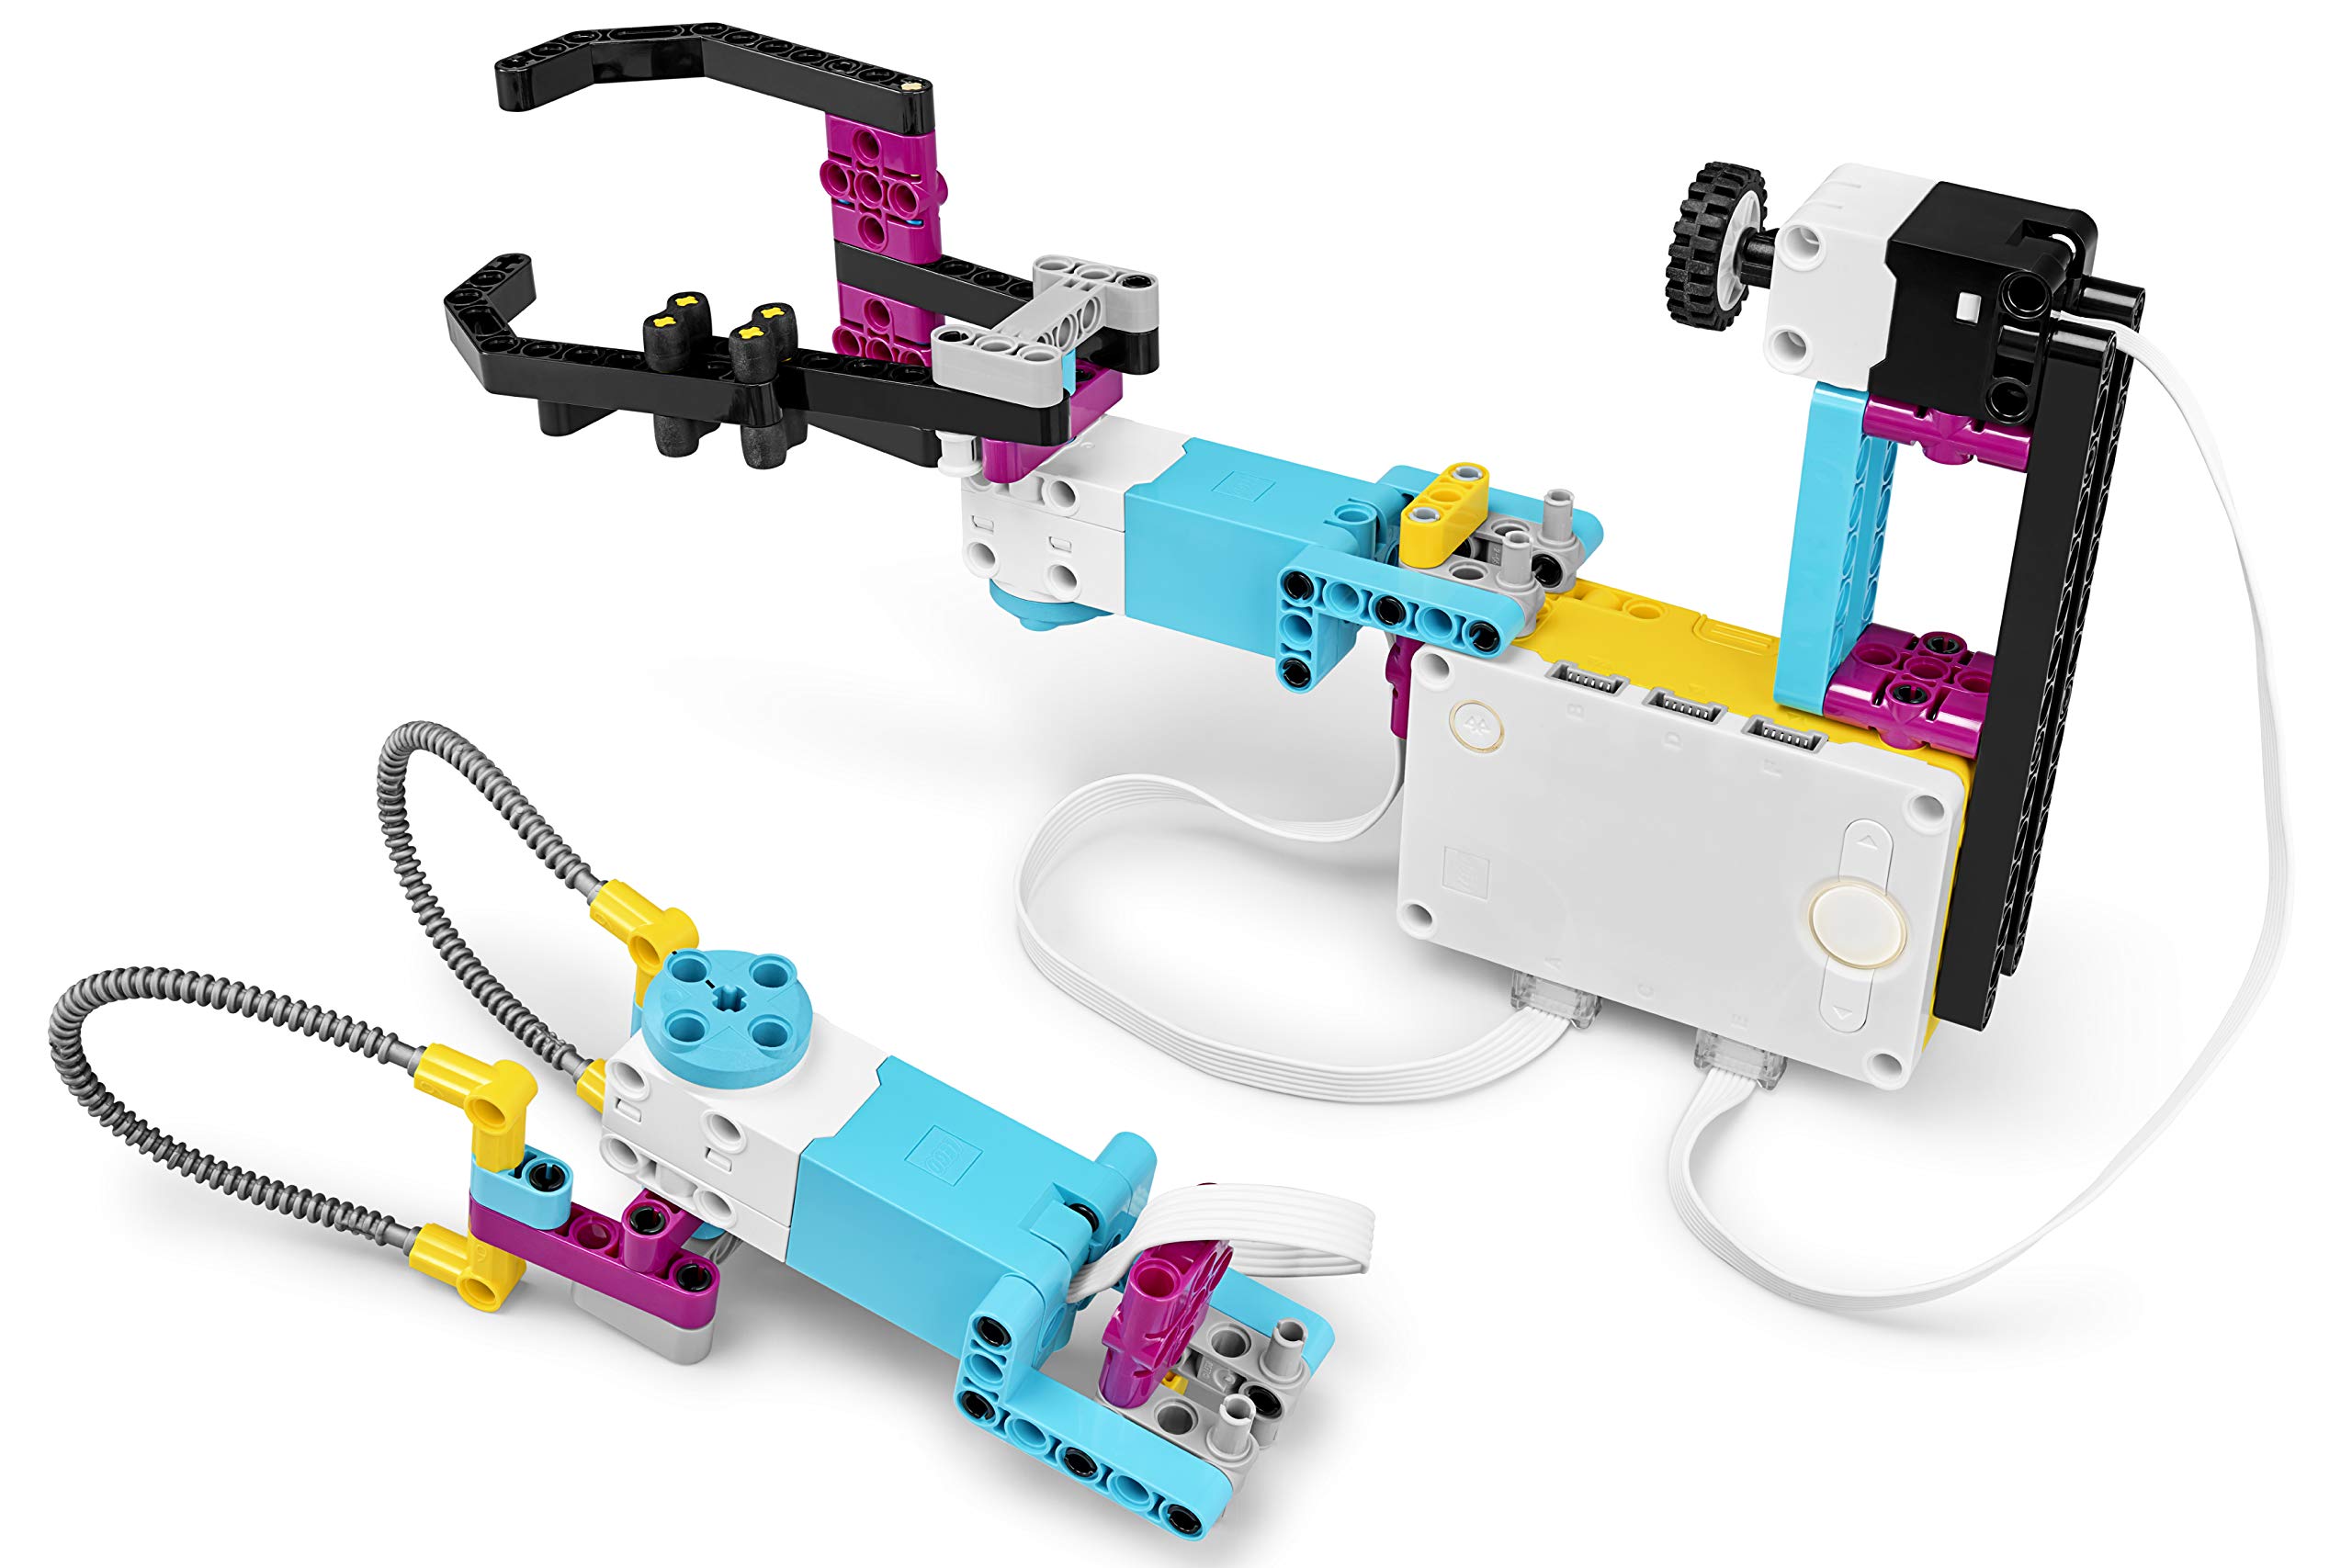 Lego Education Spike Prime Set, toy interlocking building sets